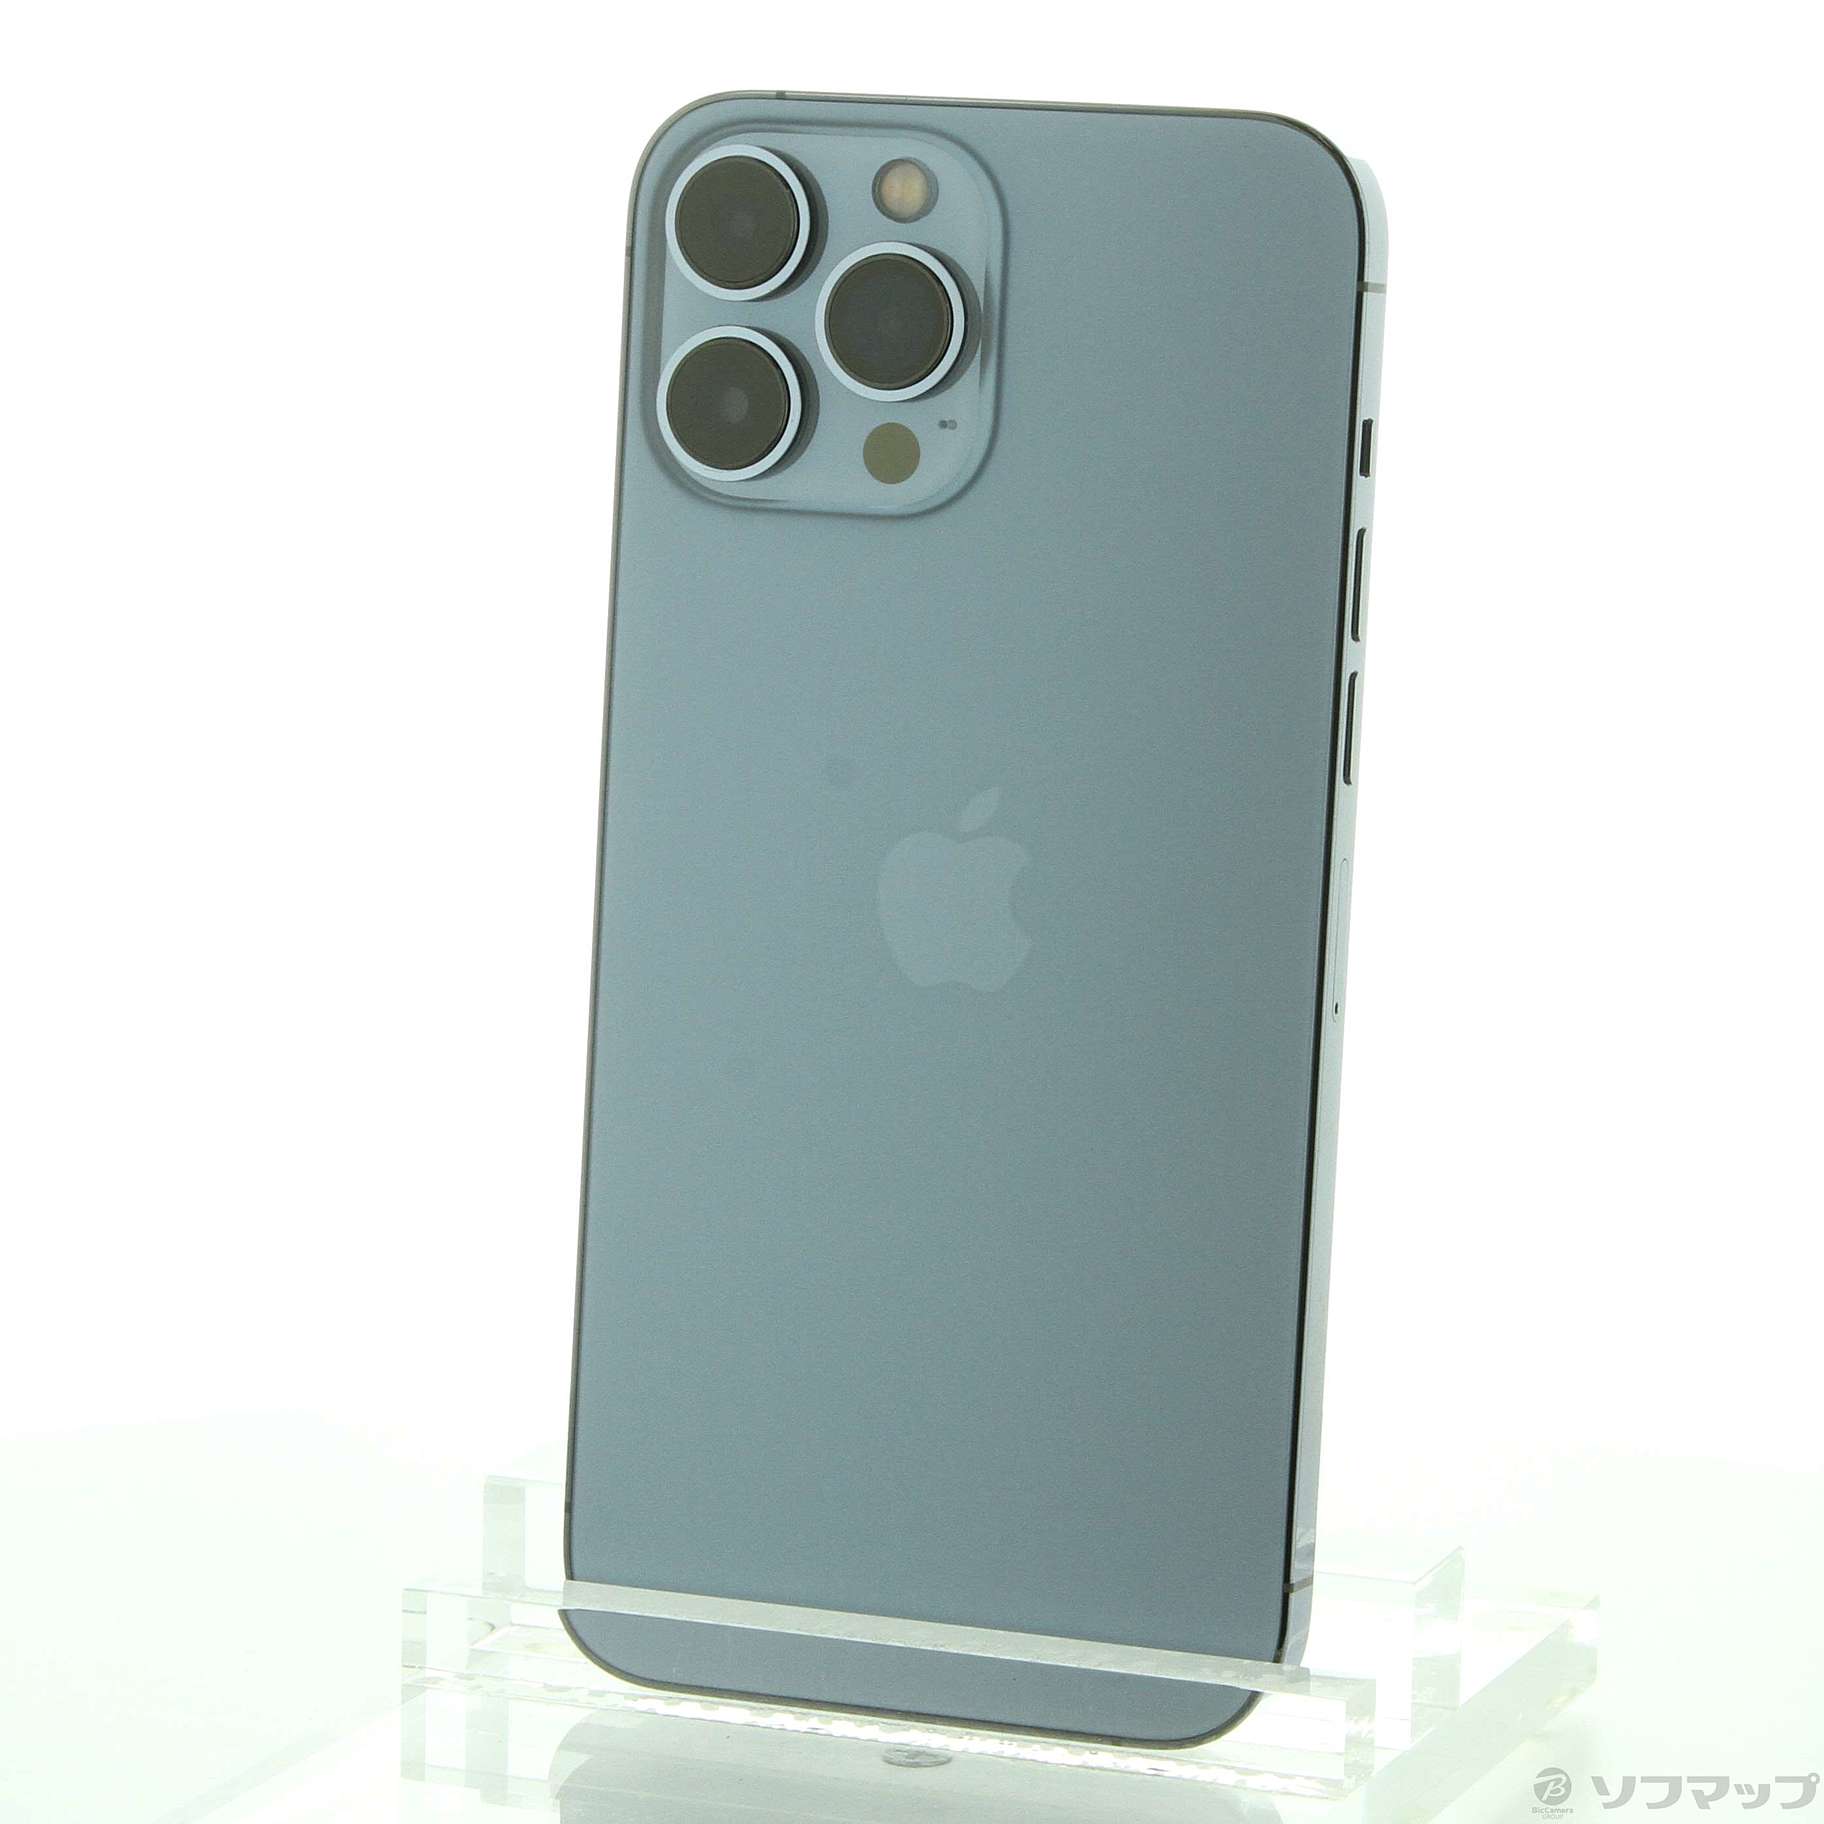 iPhone 13 Pro Max 128GB SIMフリー [シエラブルー] 中古(白ロム)価格